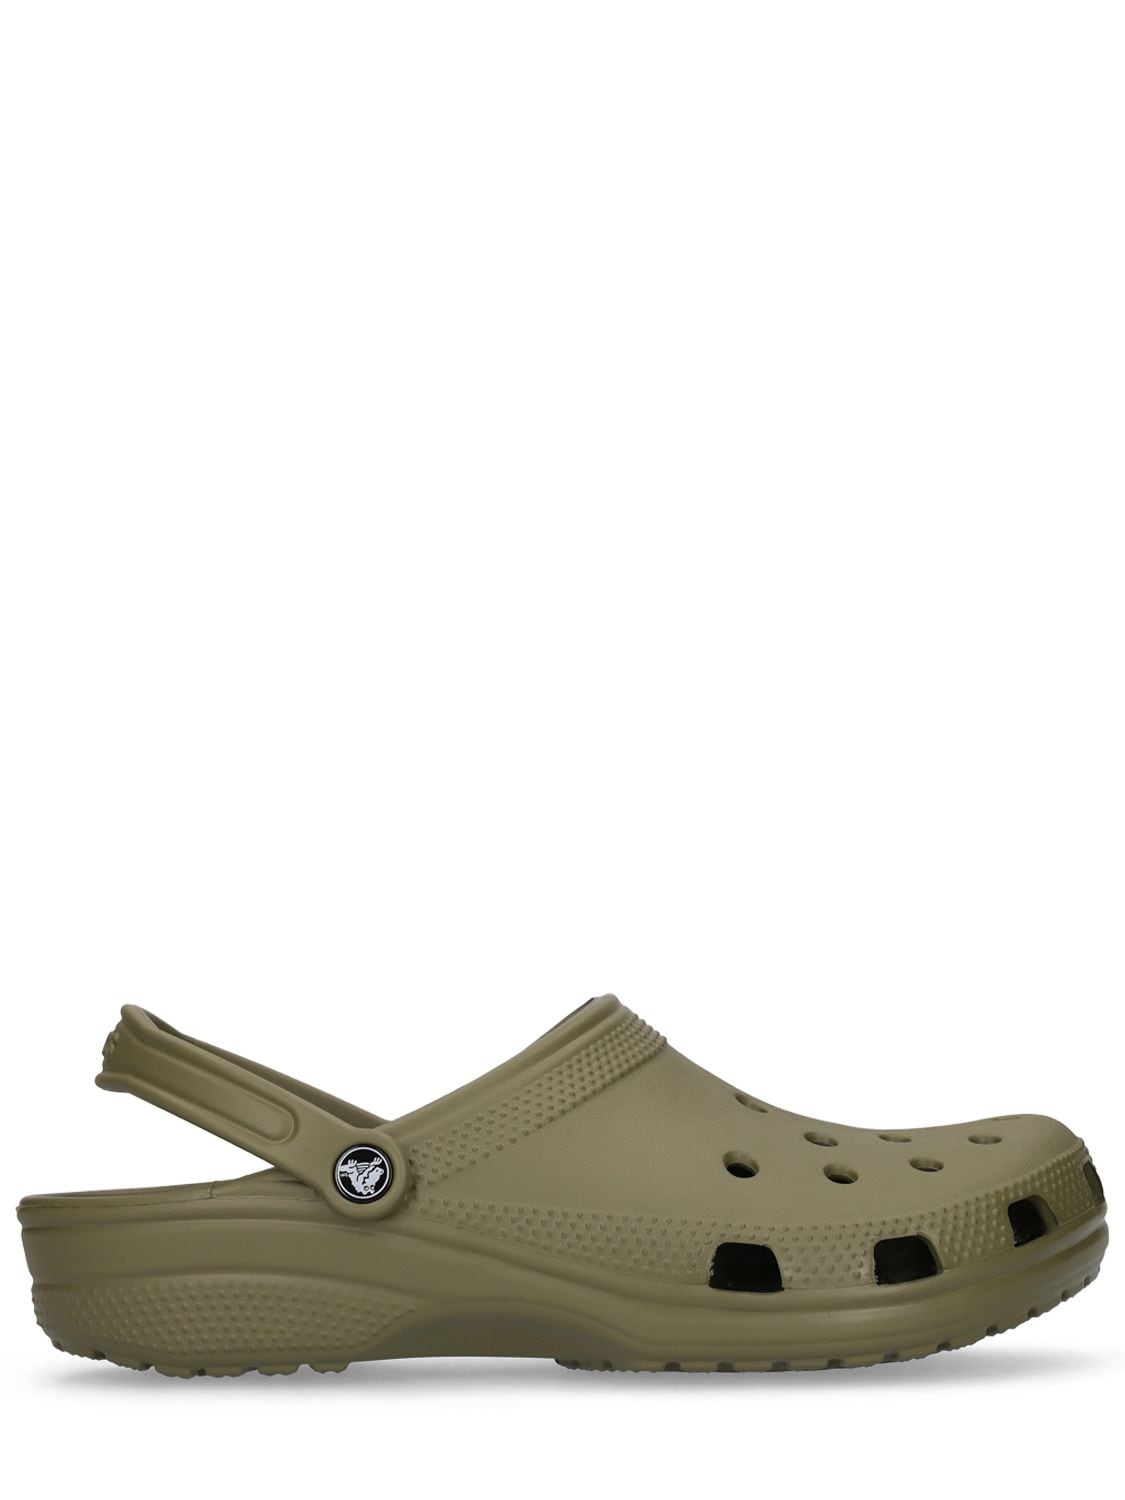 Crocs Classic Sandals In Olive Green